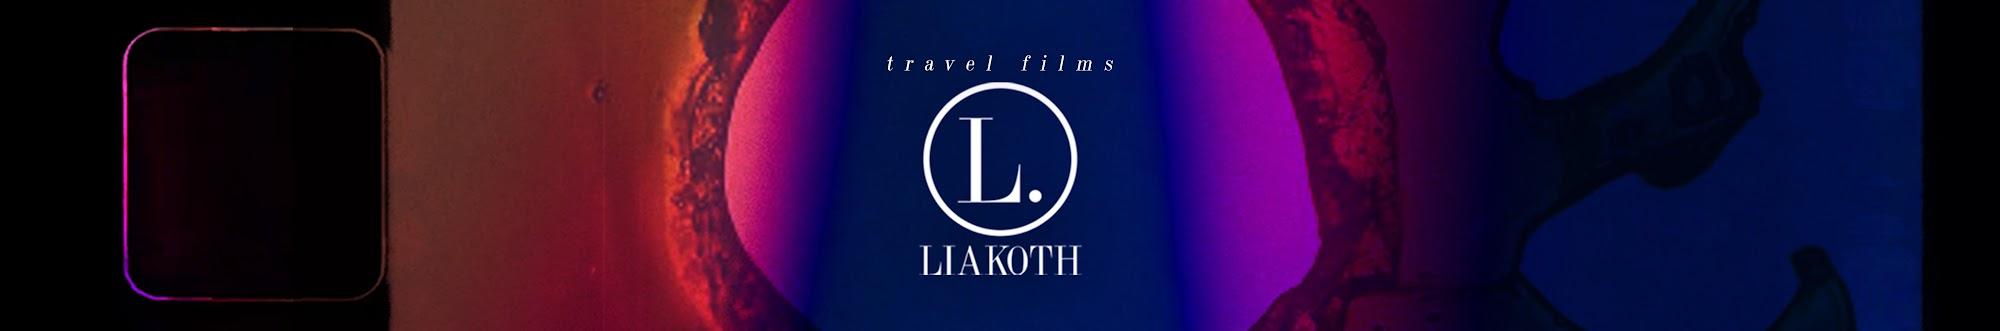 Liakoth